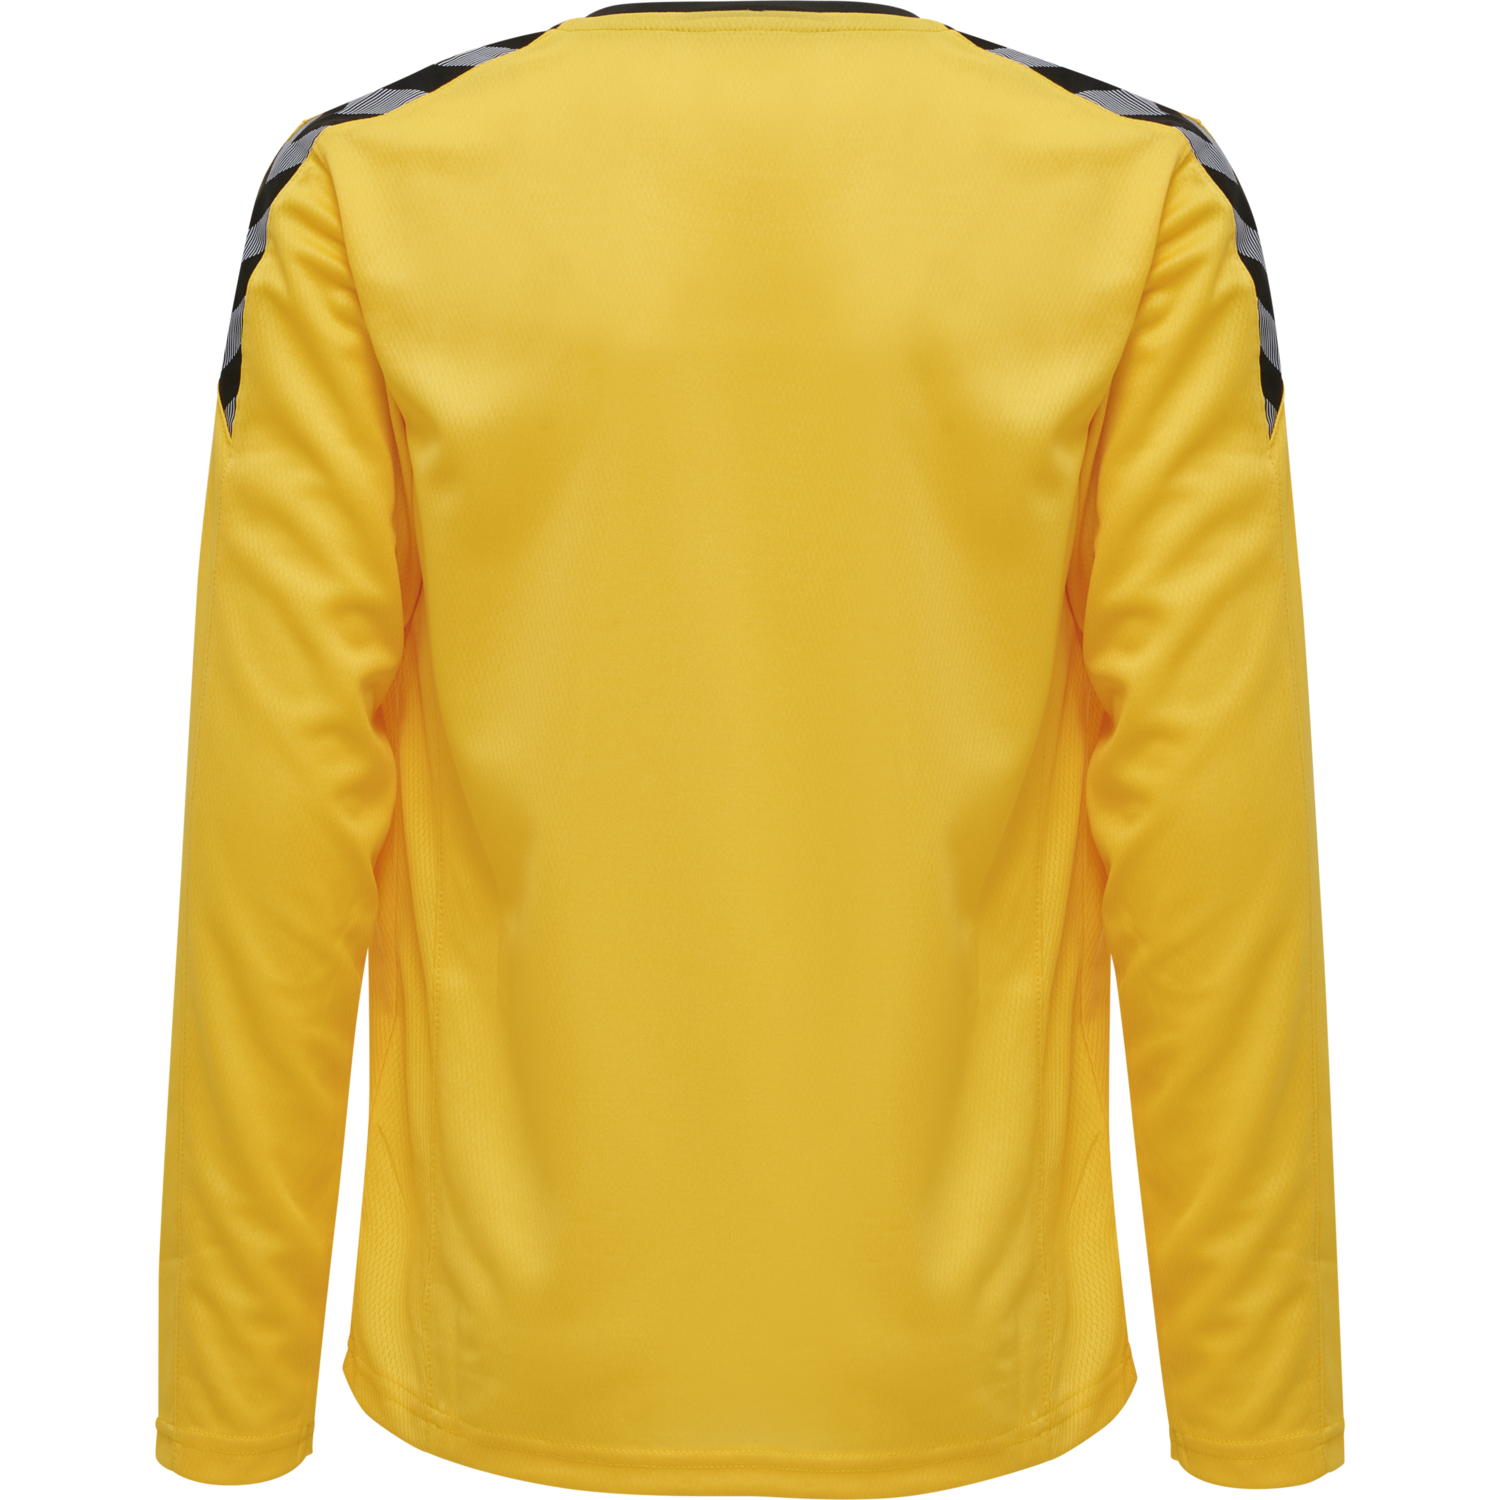 Details about   Hummel Performance Kids Sports Training Running Long Sleeve Jersey Shirt Yellow 